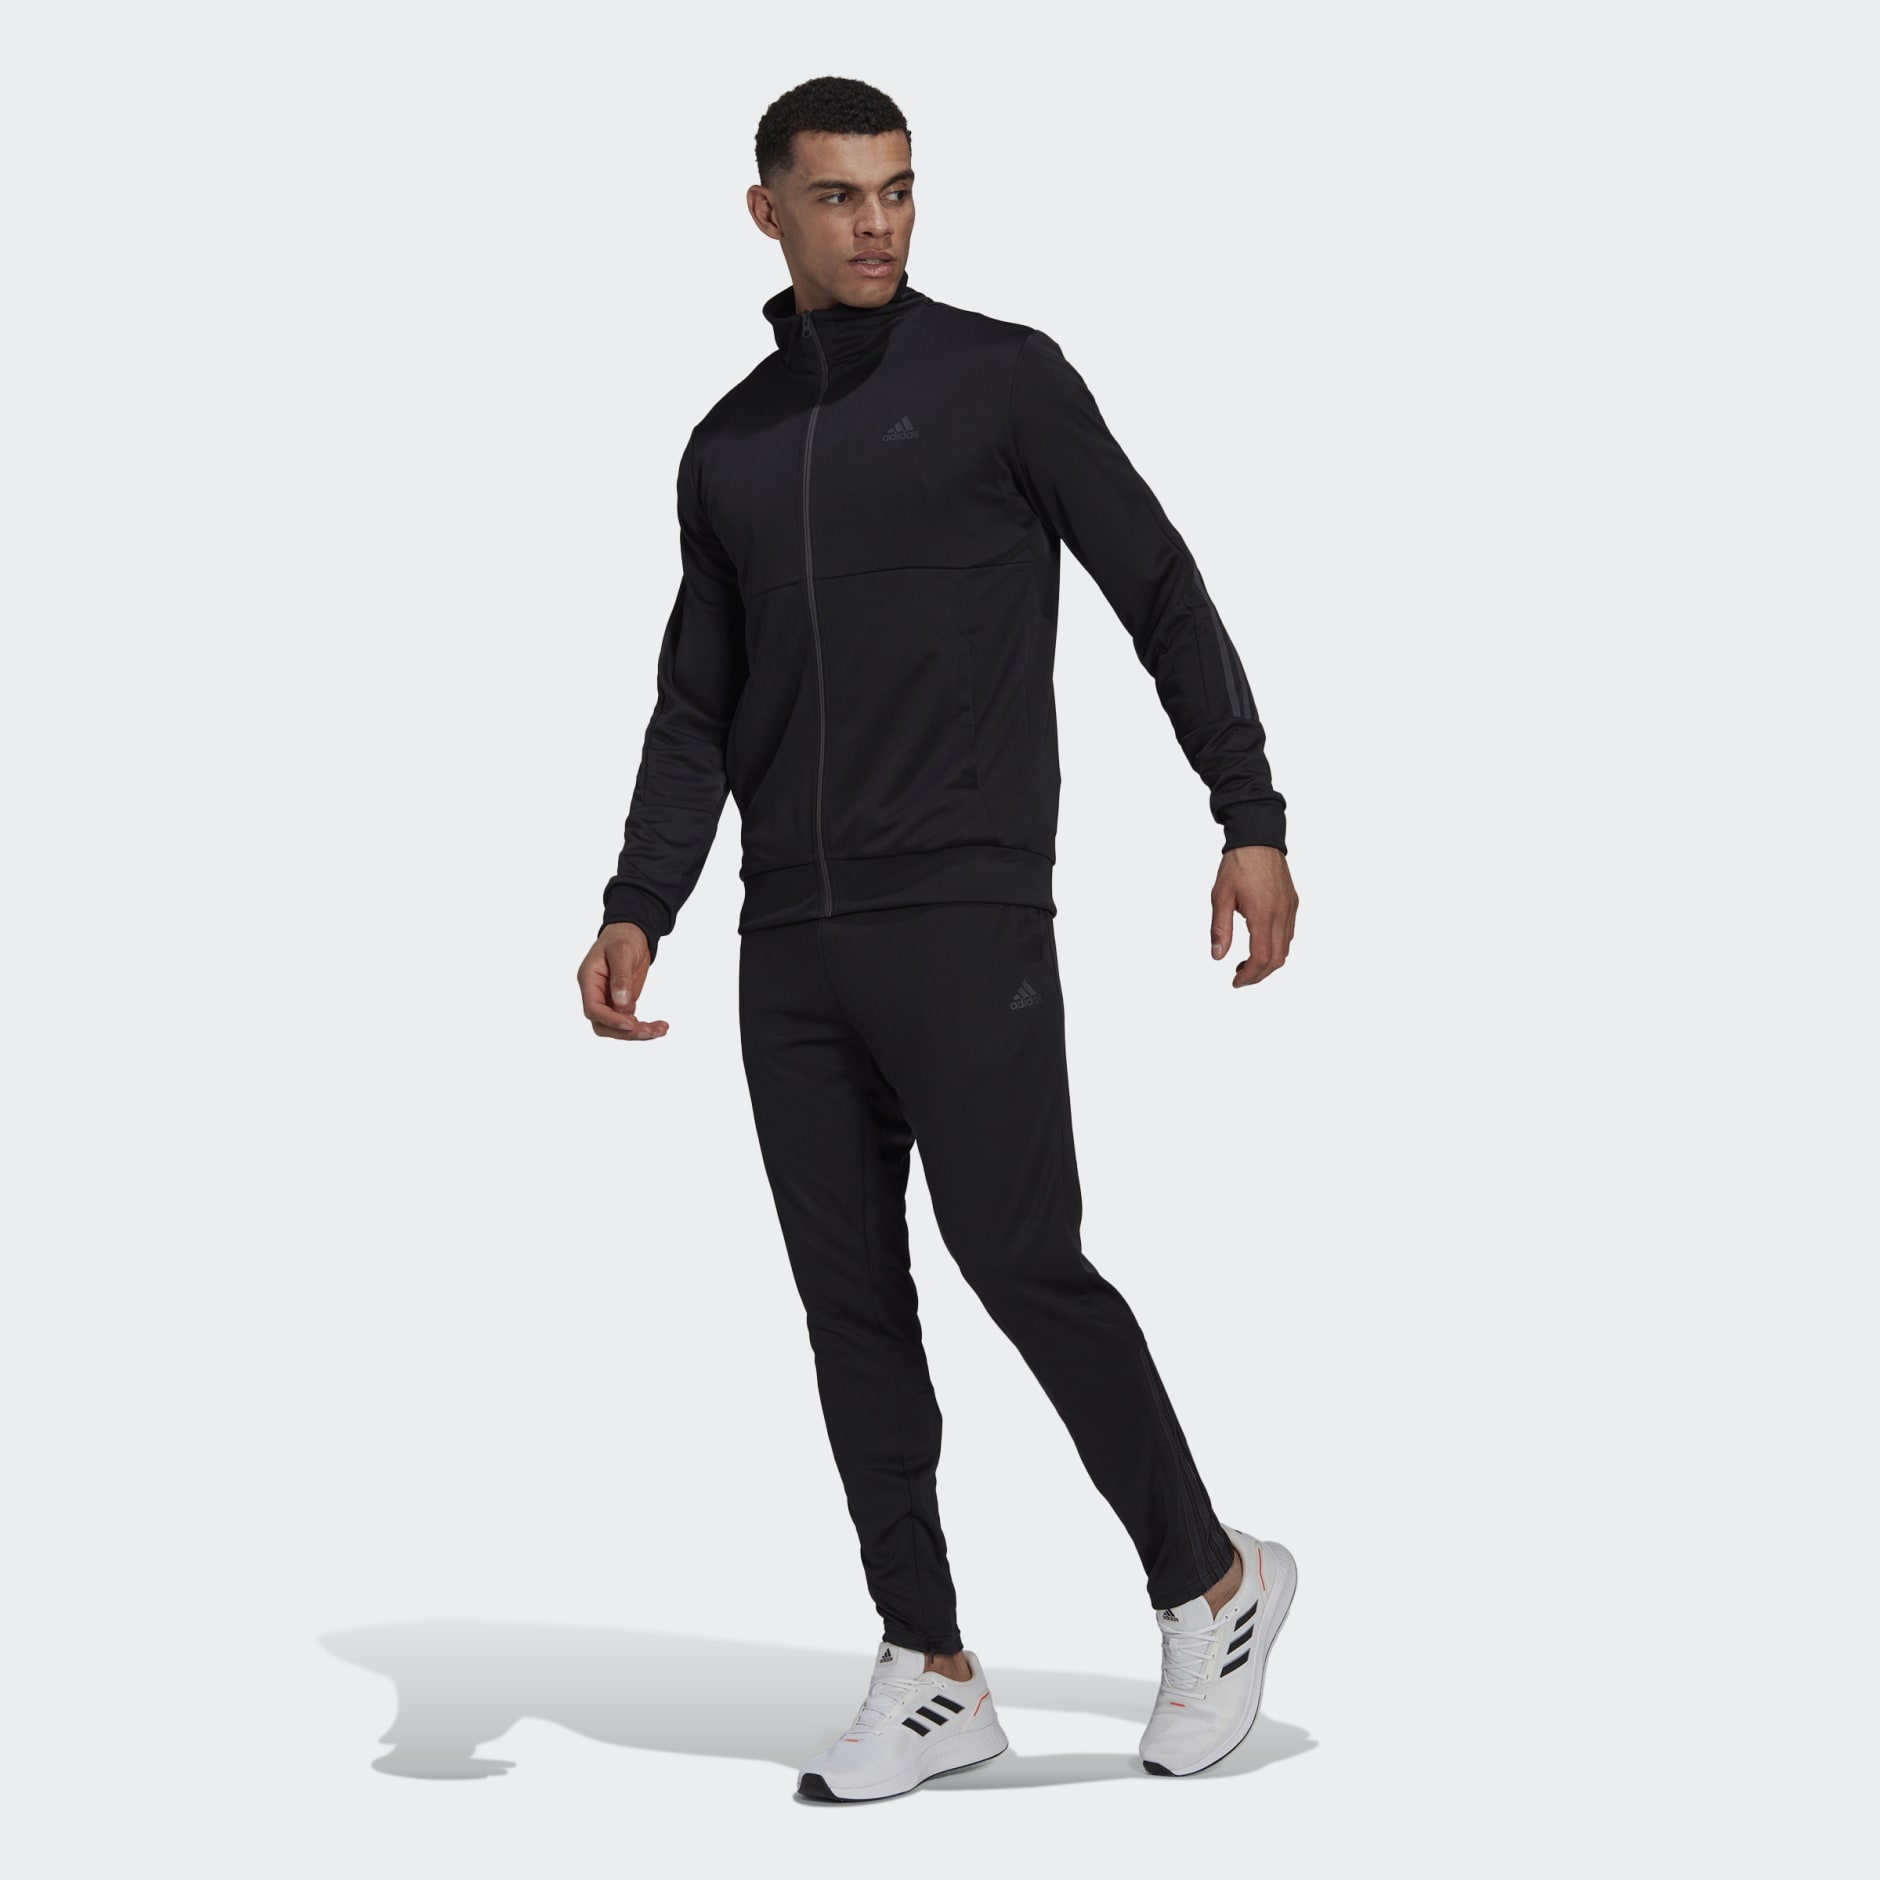 forbi solopgang gentage Men's Clothing - Slim Zipped Track Suit - Black | adidas Qatar